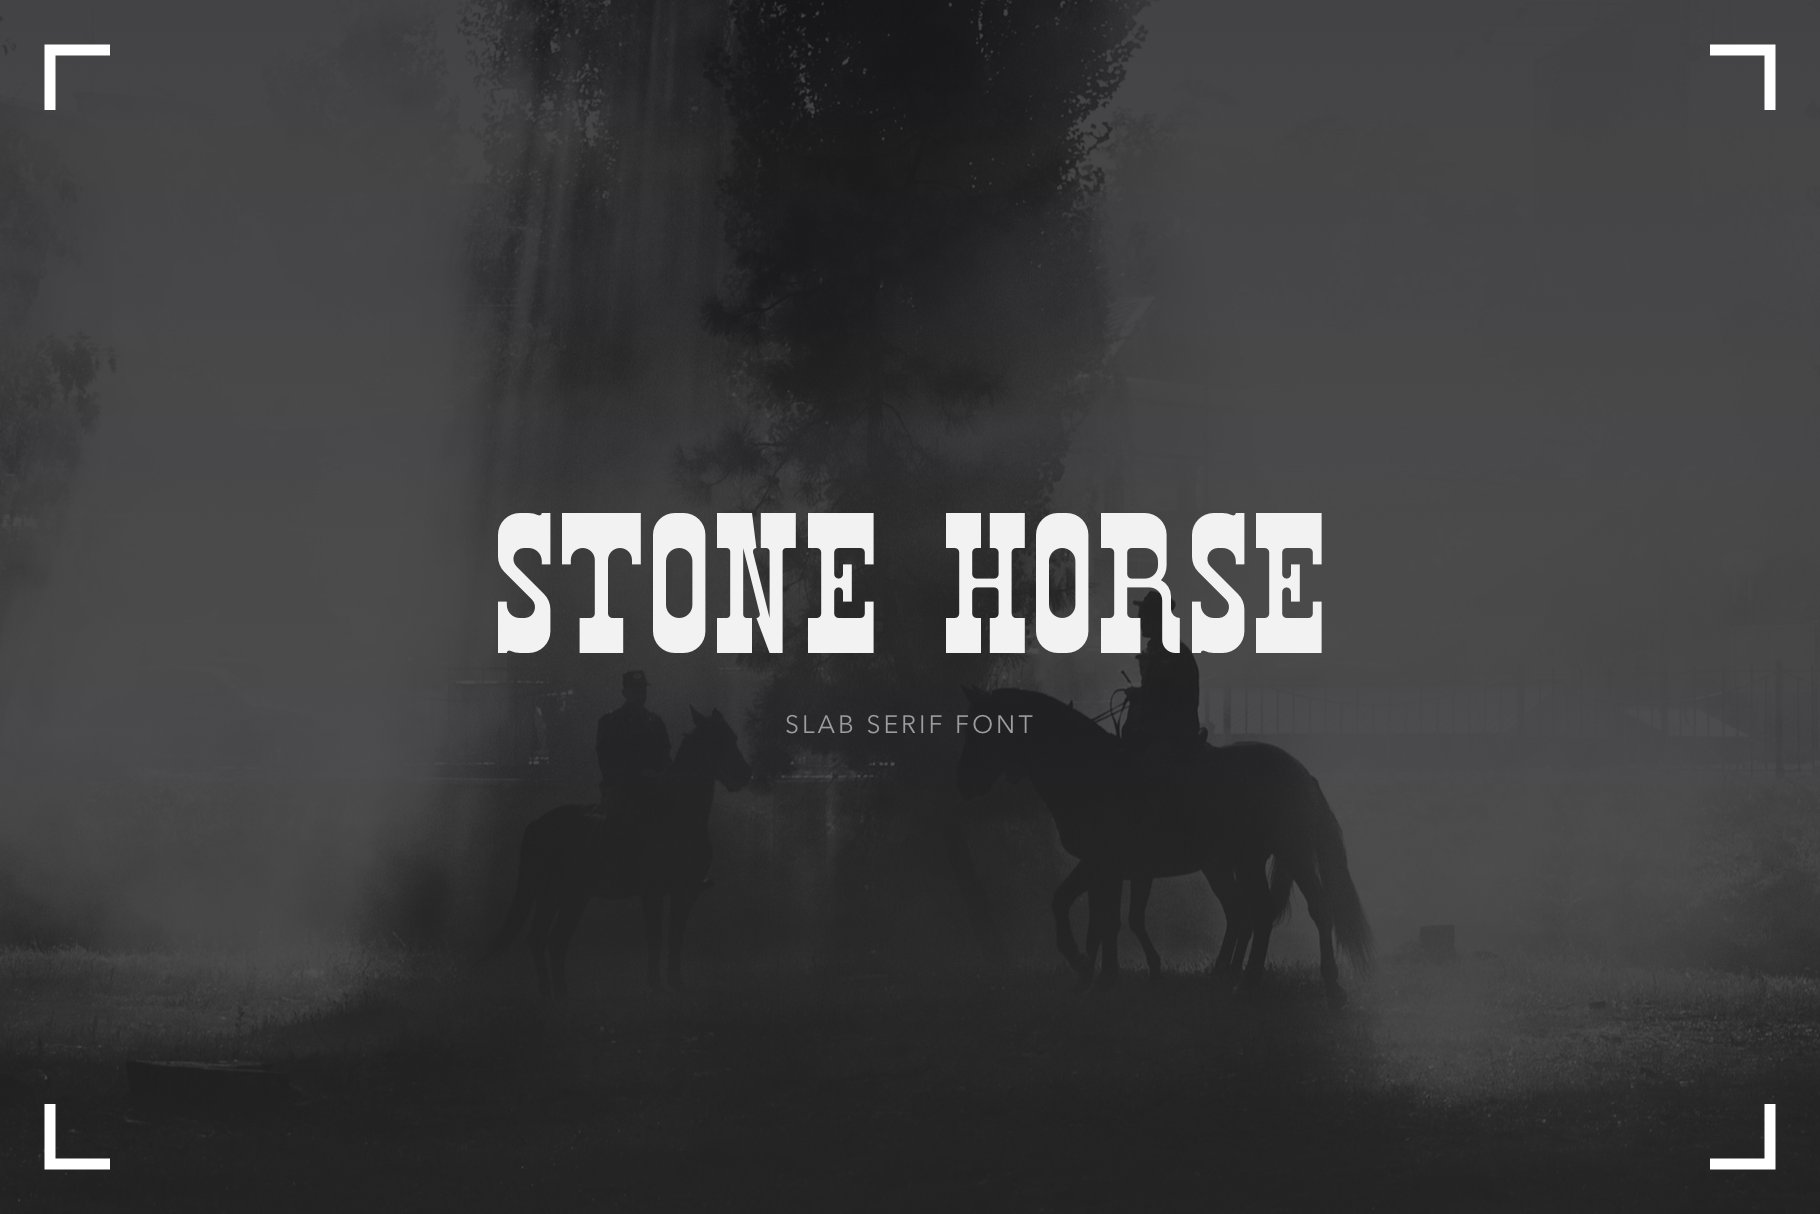 STONE HORSE - Vintage SlabSerif Font cover image.